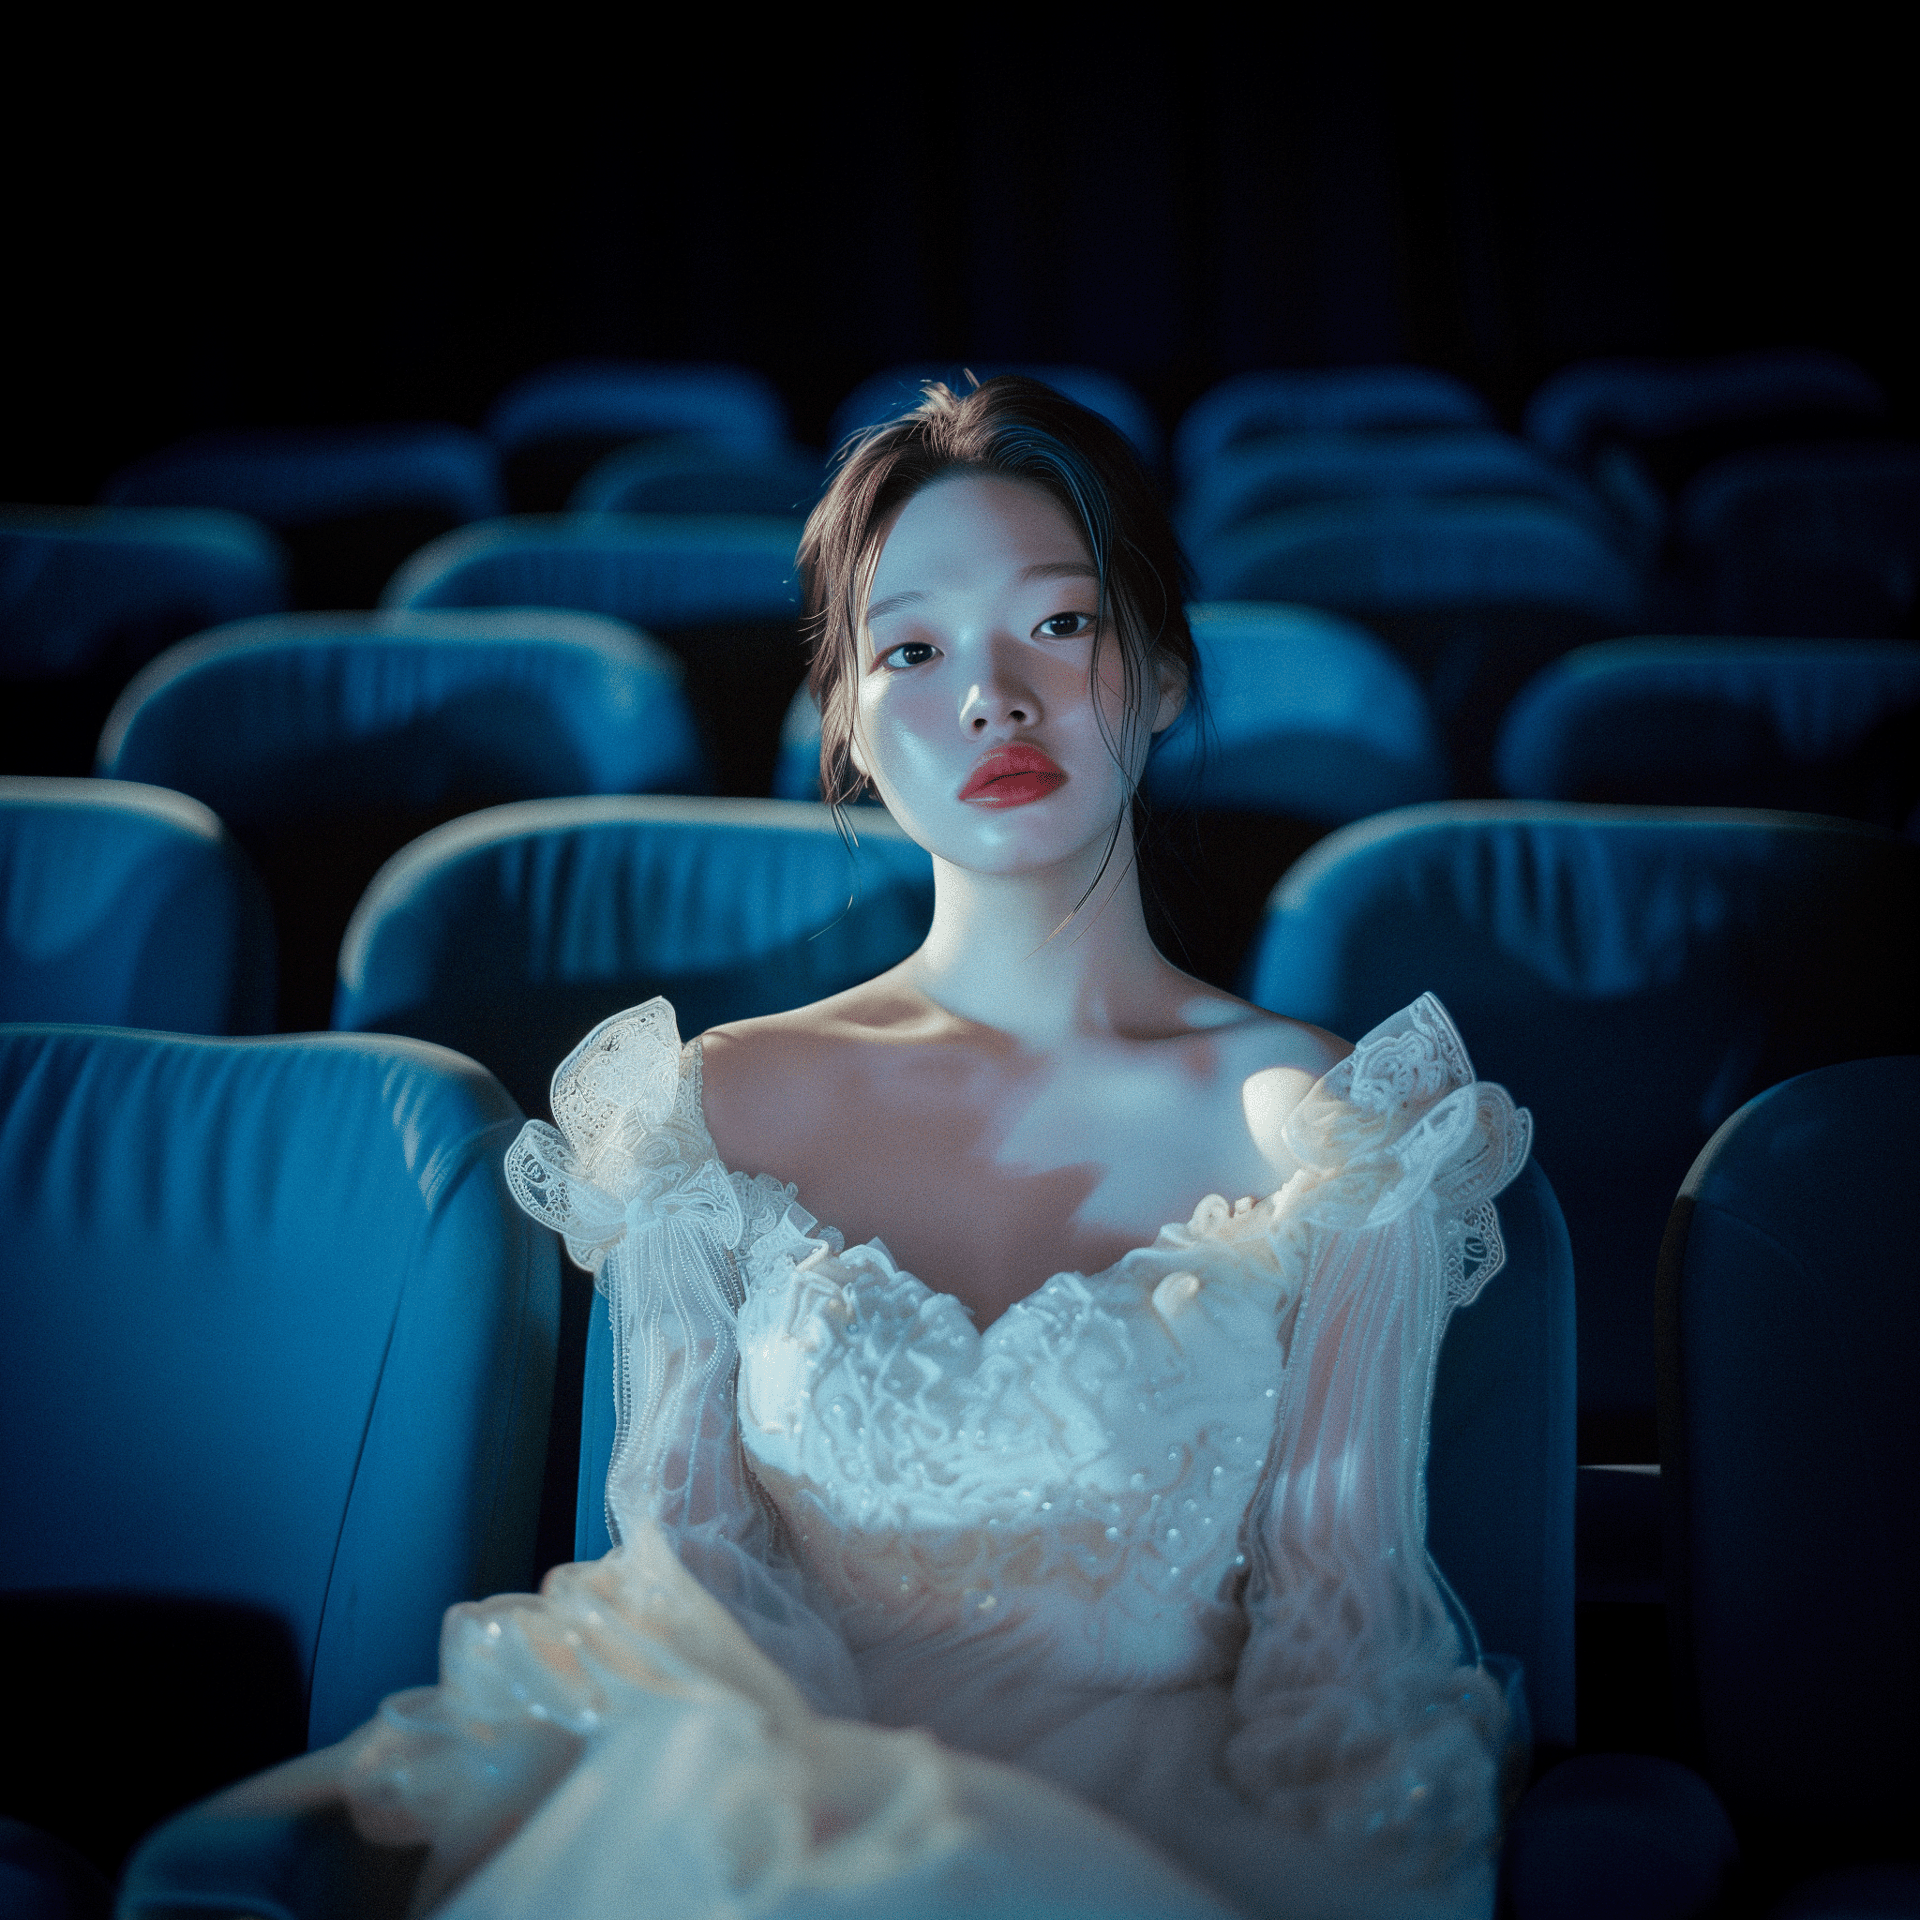 A bride sitting in the empty cinema